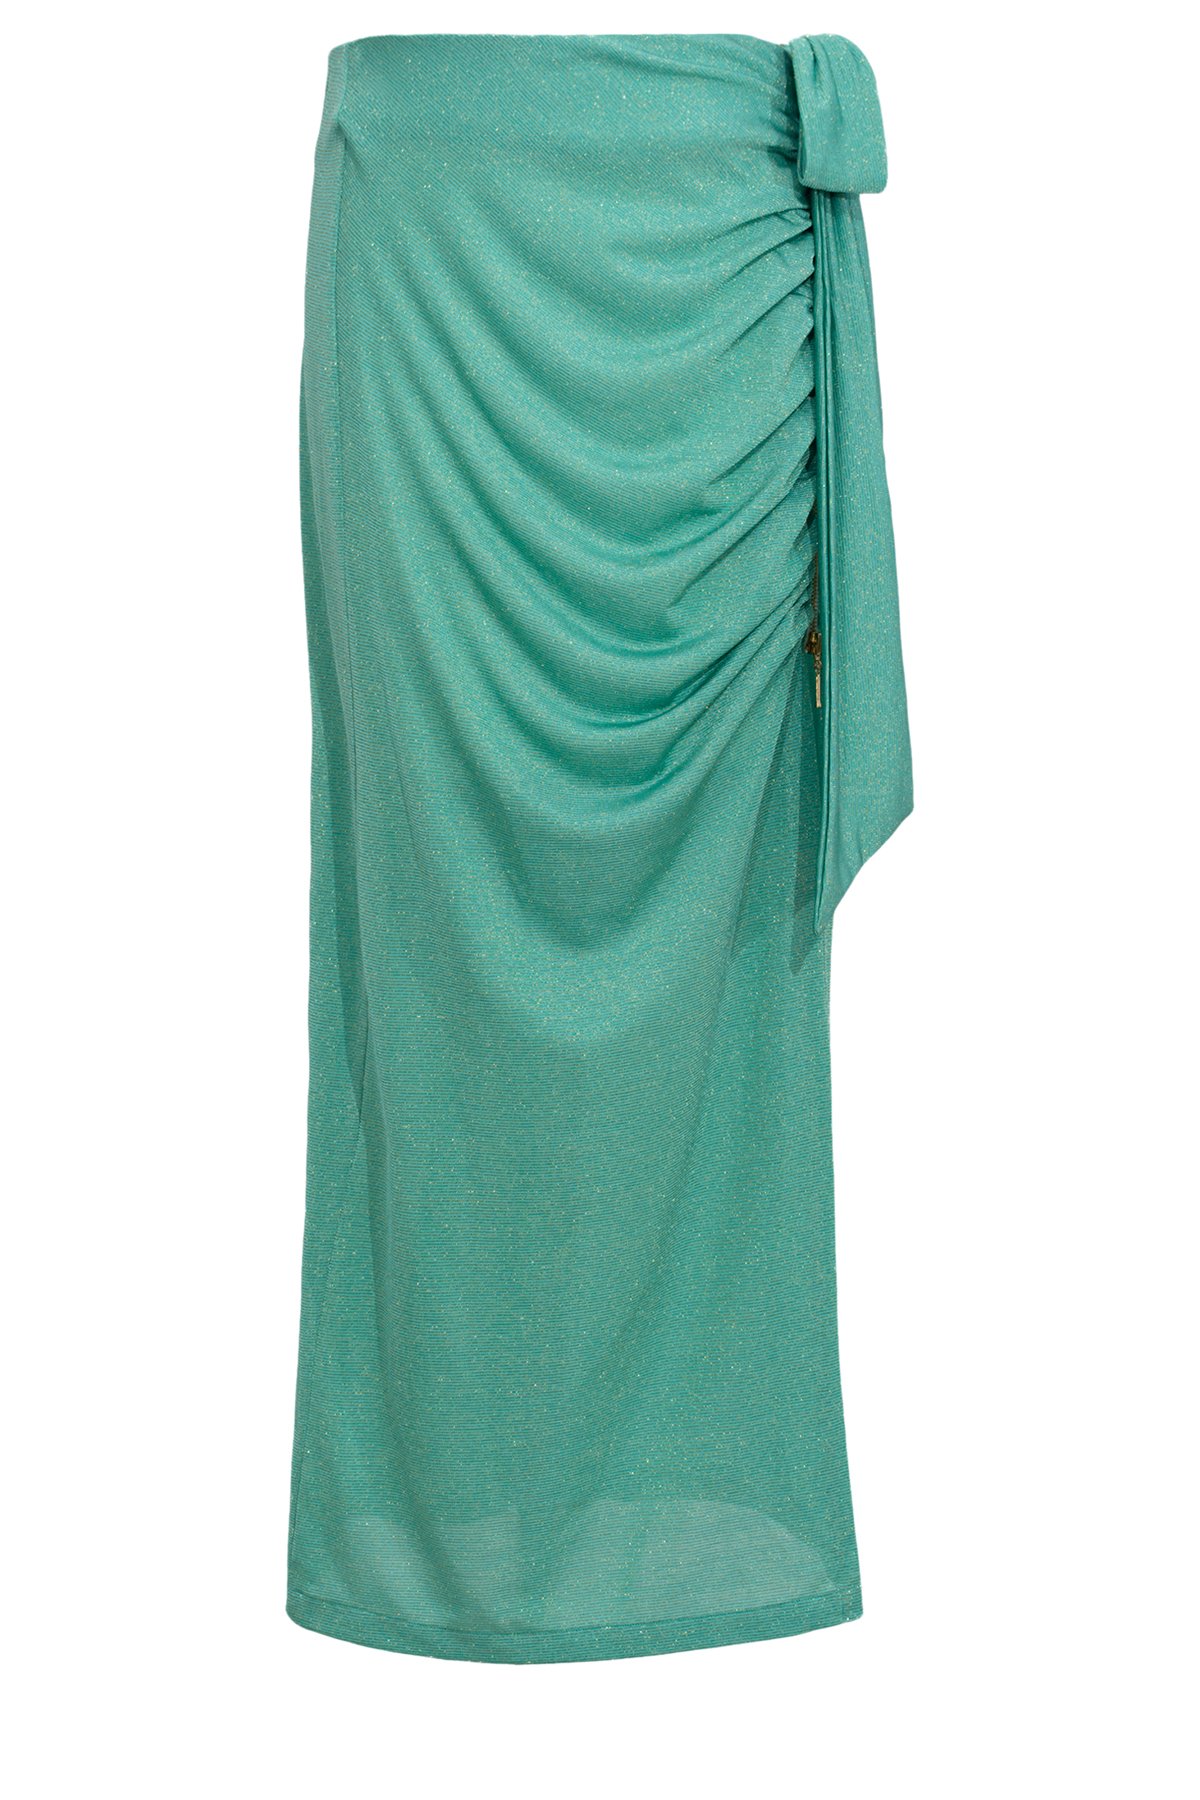 Green Shiny Zippered Skirt